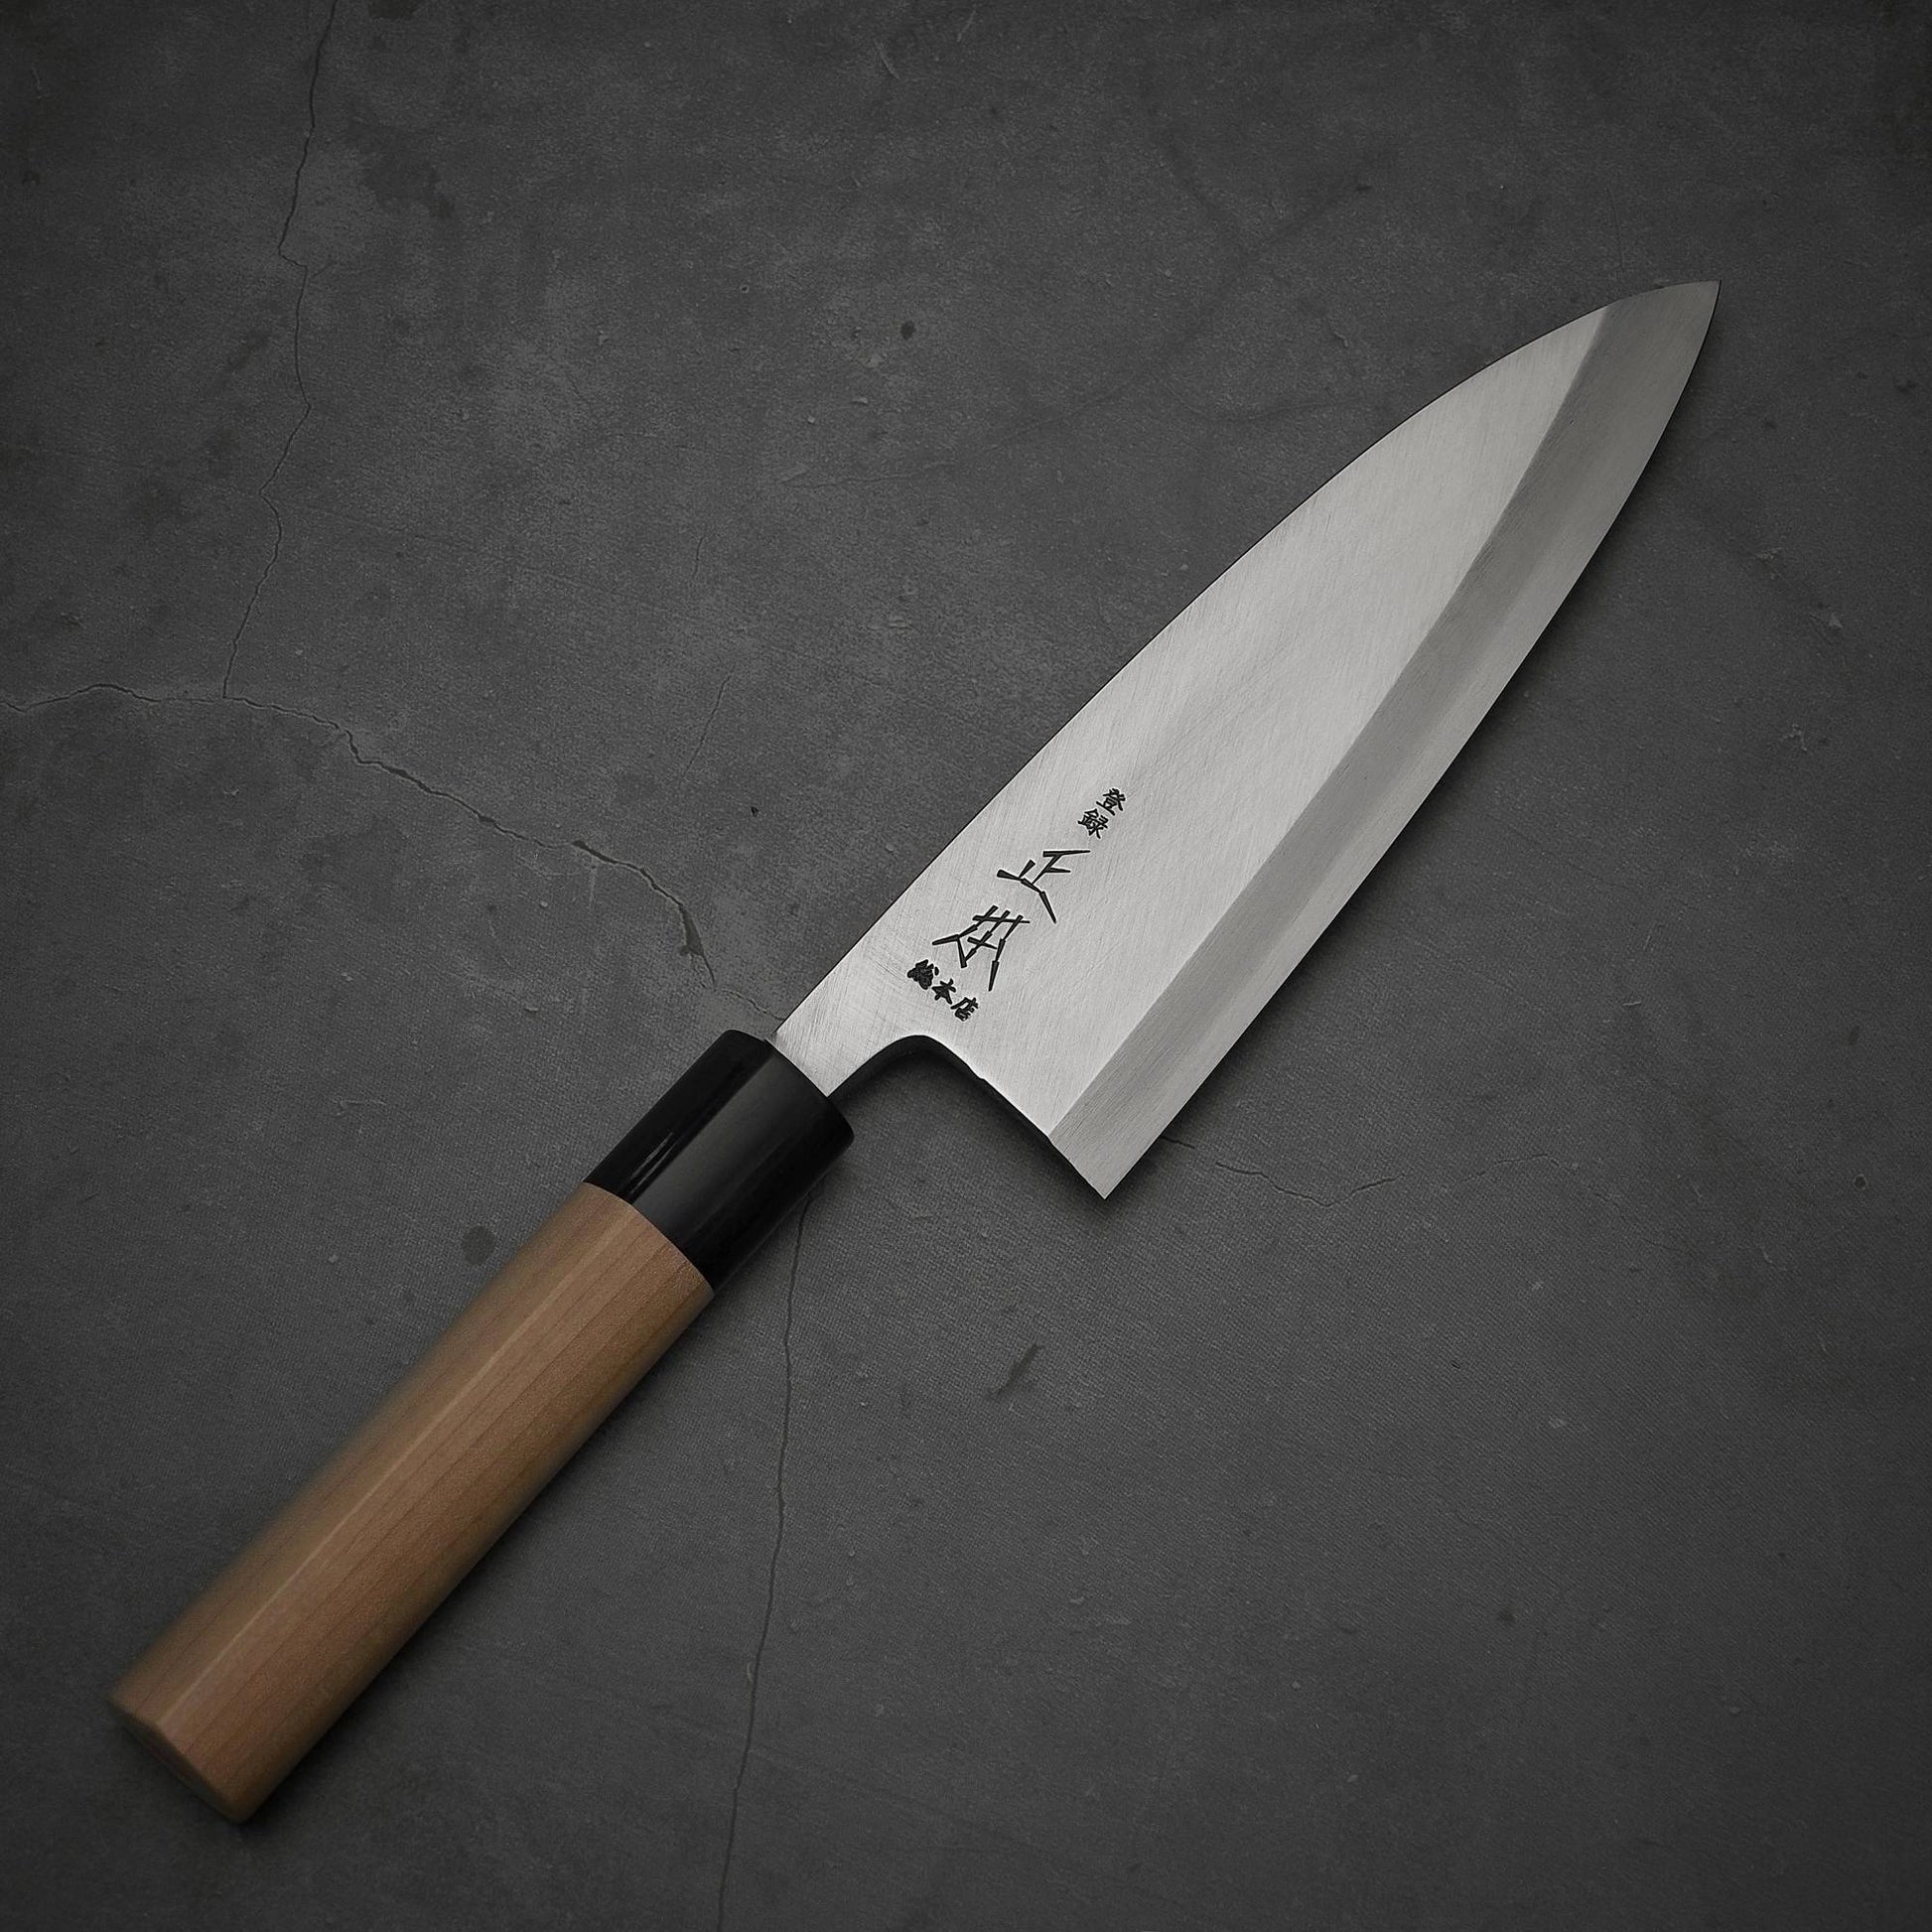 Top view of Masamoto KS shirogami#2 deba knife